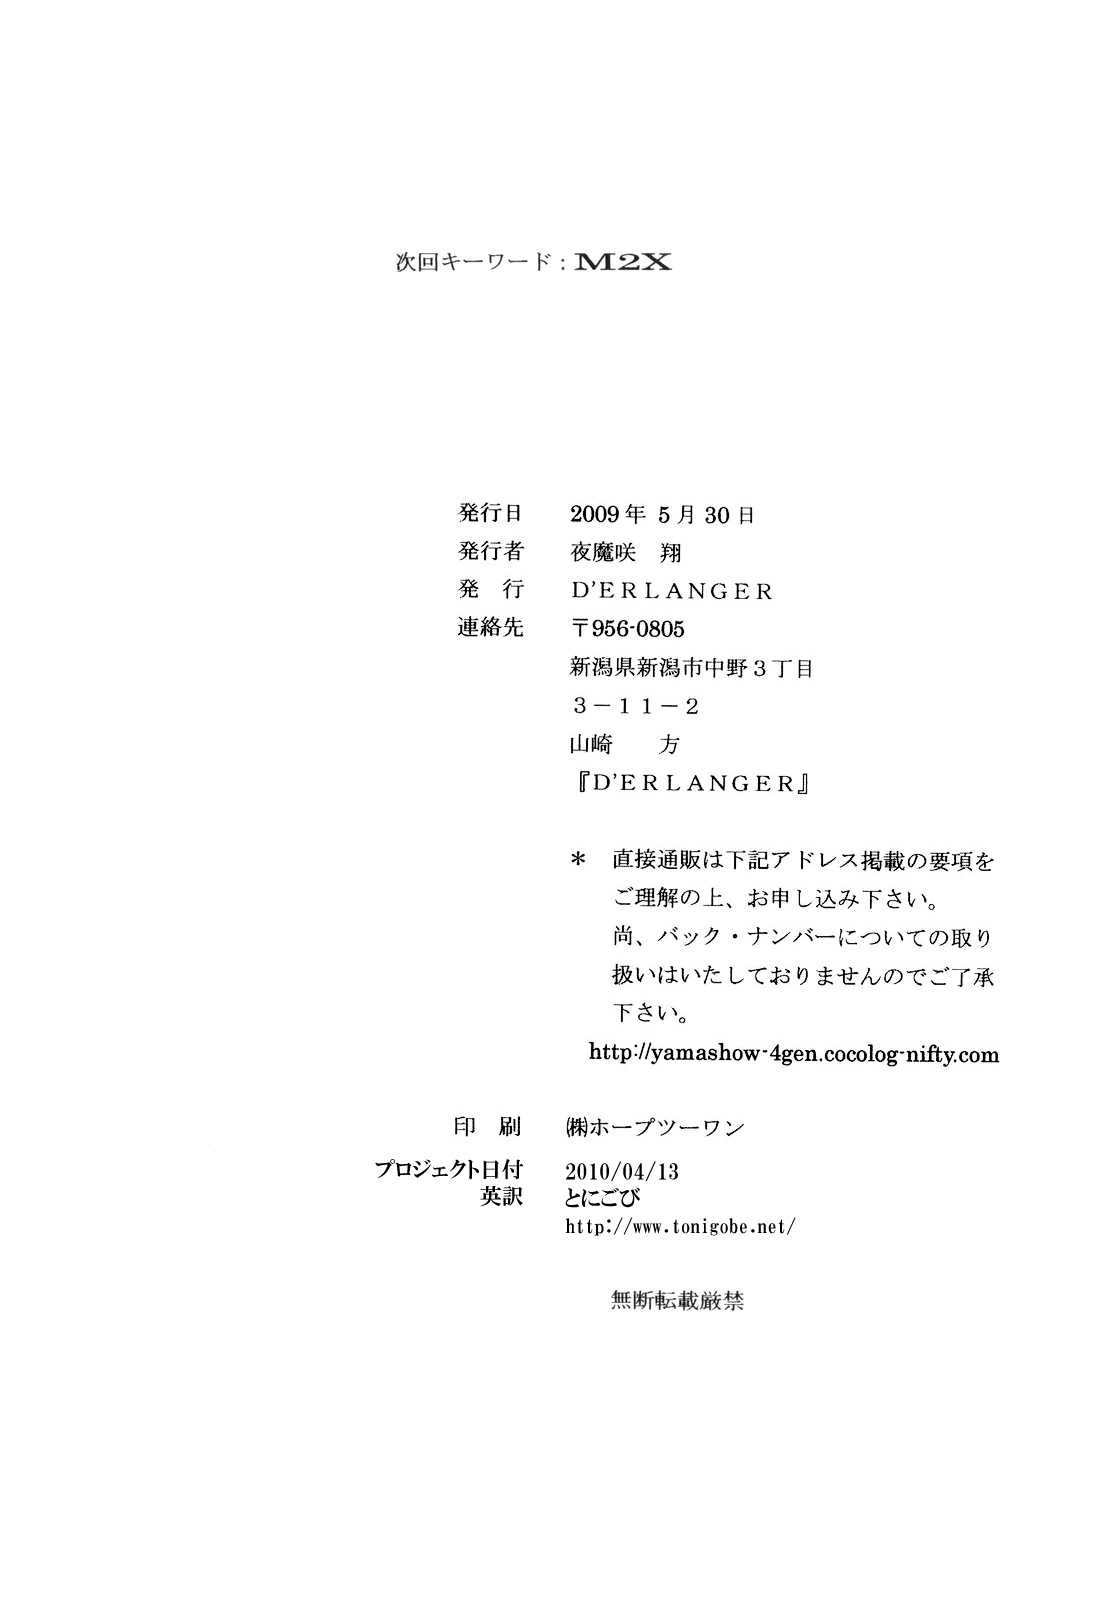 [D&#039;Erlanger] (Show Yamazaki) Milk Pie - 1st Tea Break [English translated by Tonigobe] 